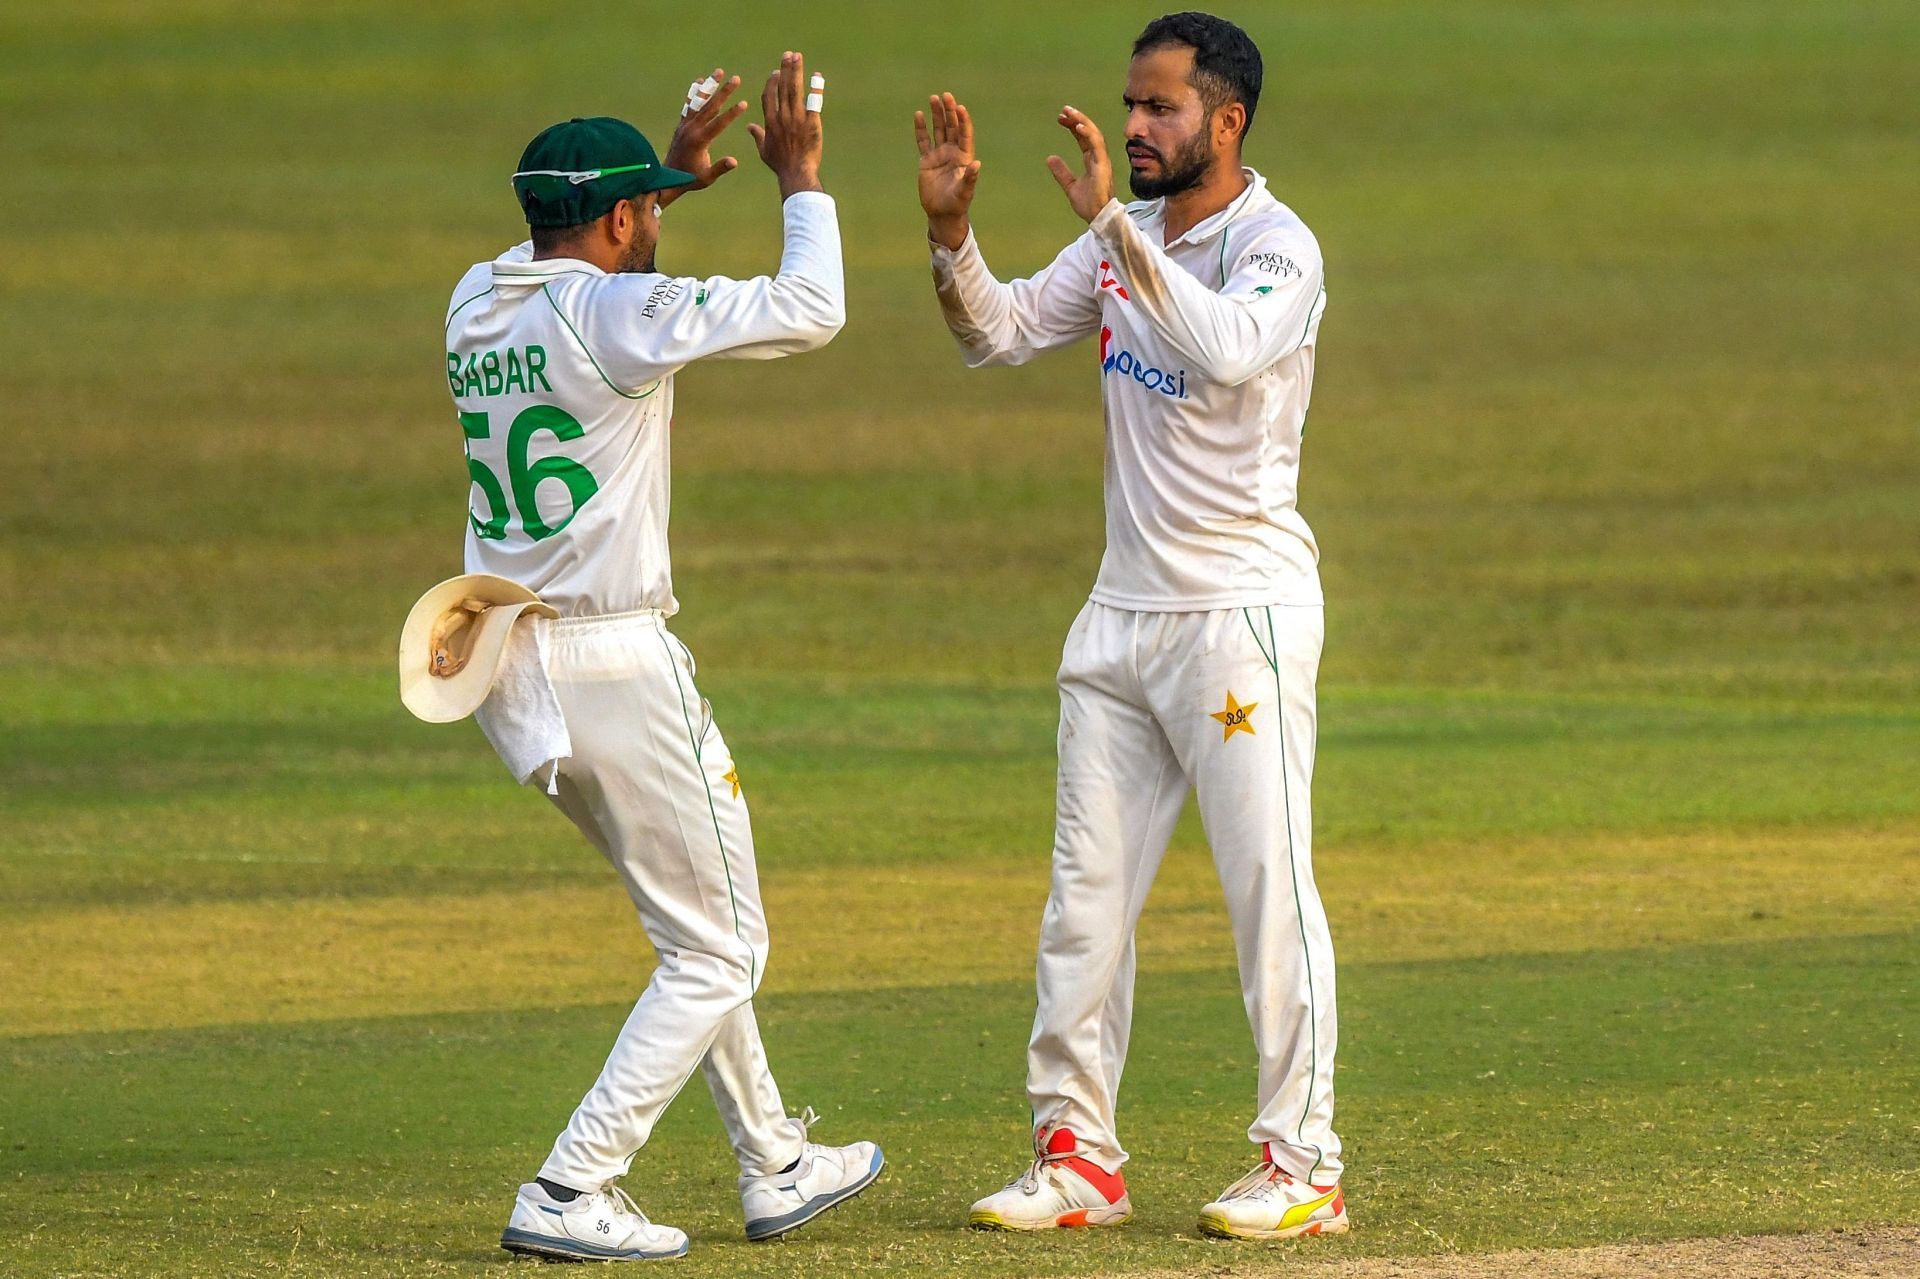 Mohammad Nawaz celebrates a wicket with Babar Azam. (Credits: Twitter)